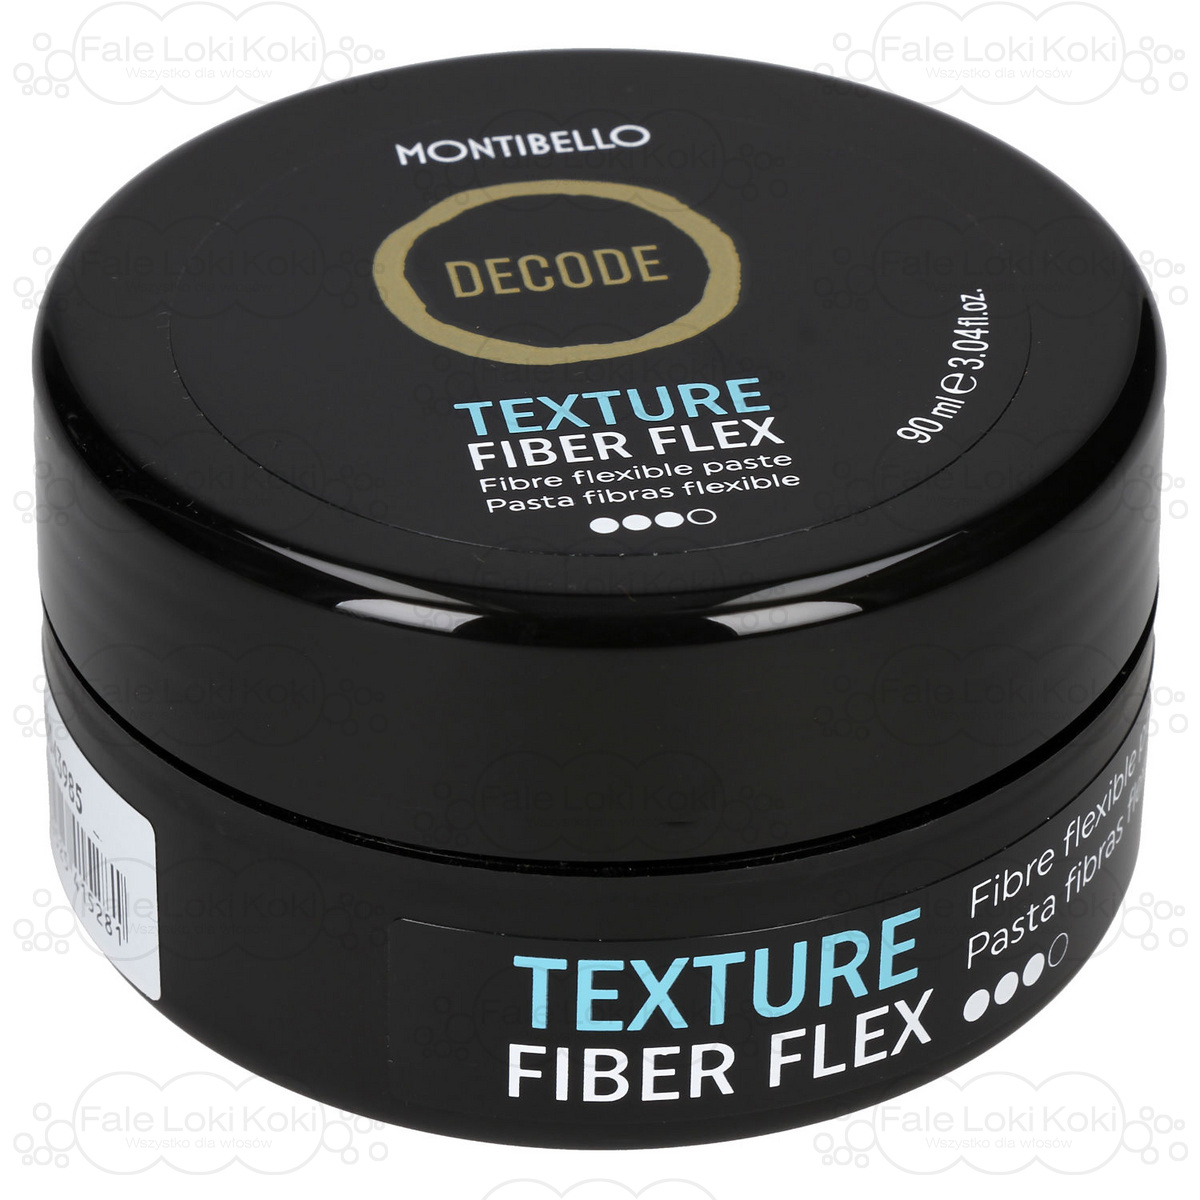 MONTIBELLO DECODE elastyczna pasta modelująca do włosów Texture Fiber Flex 90 ml